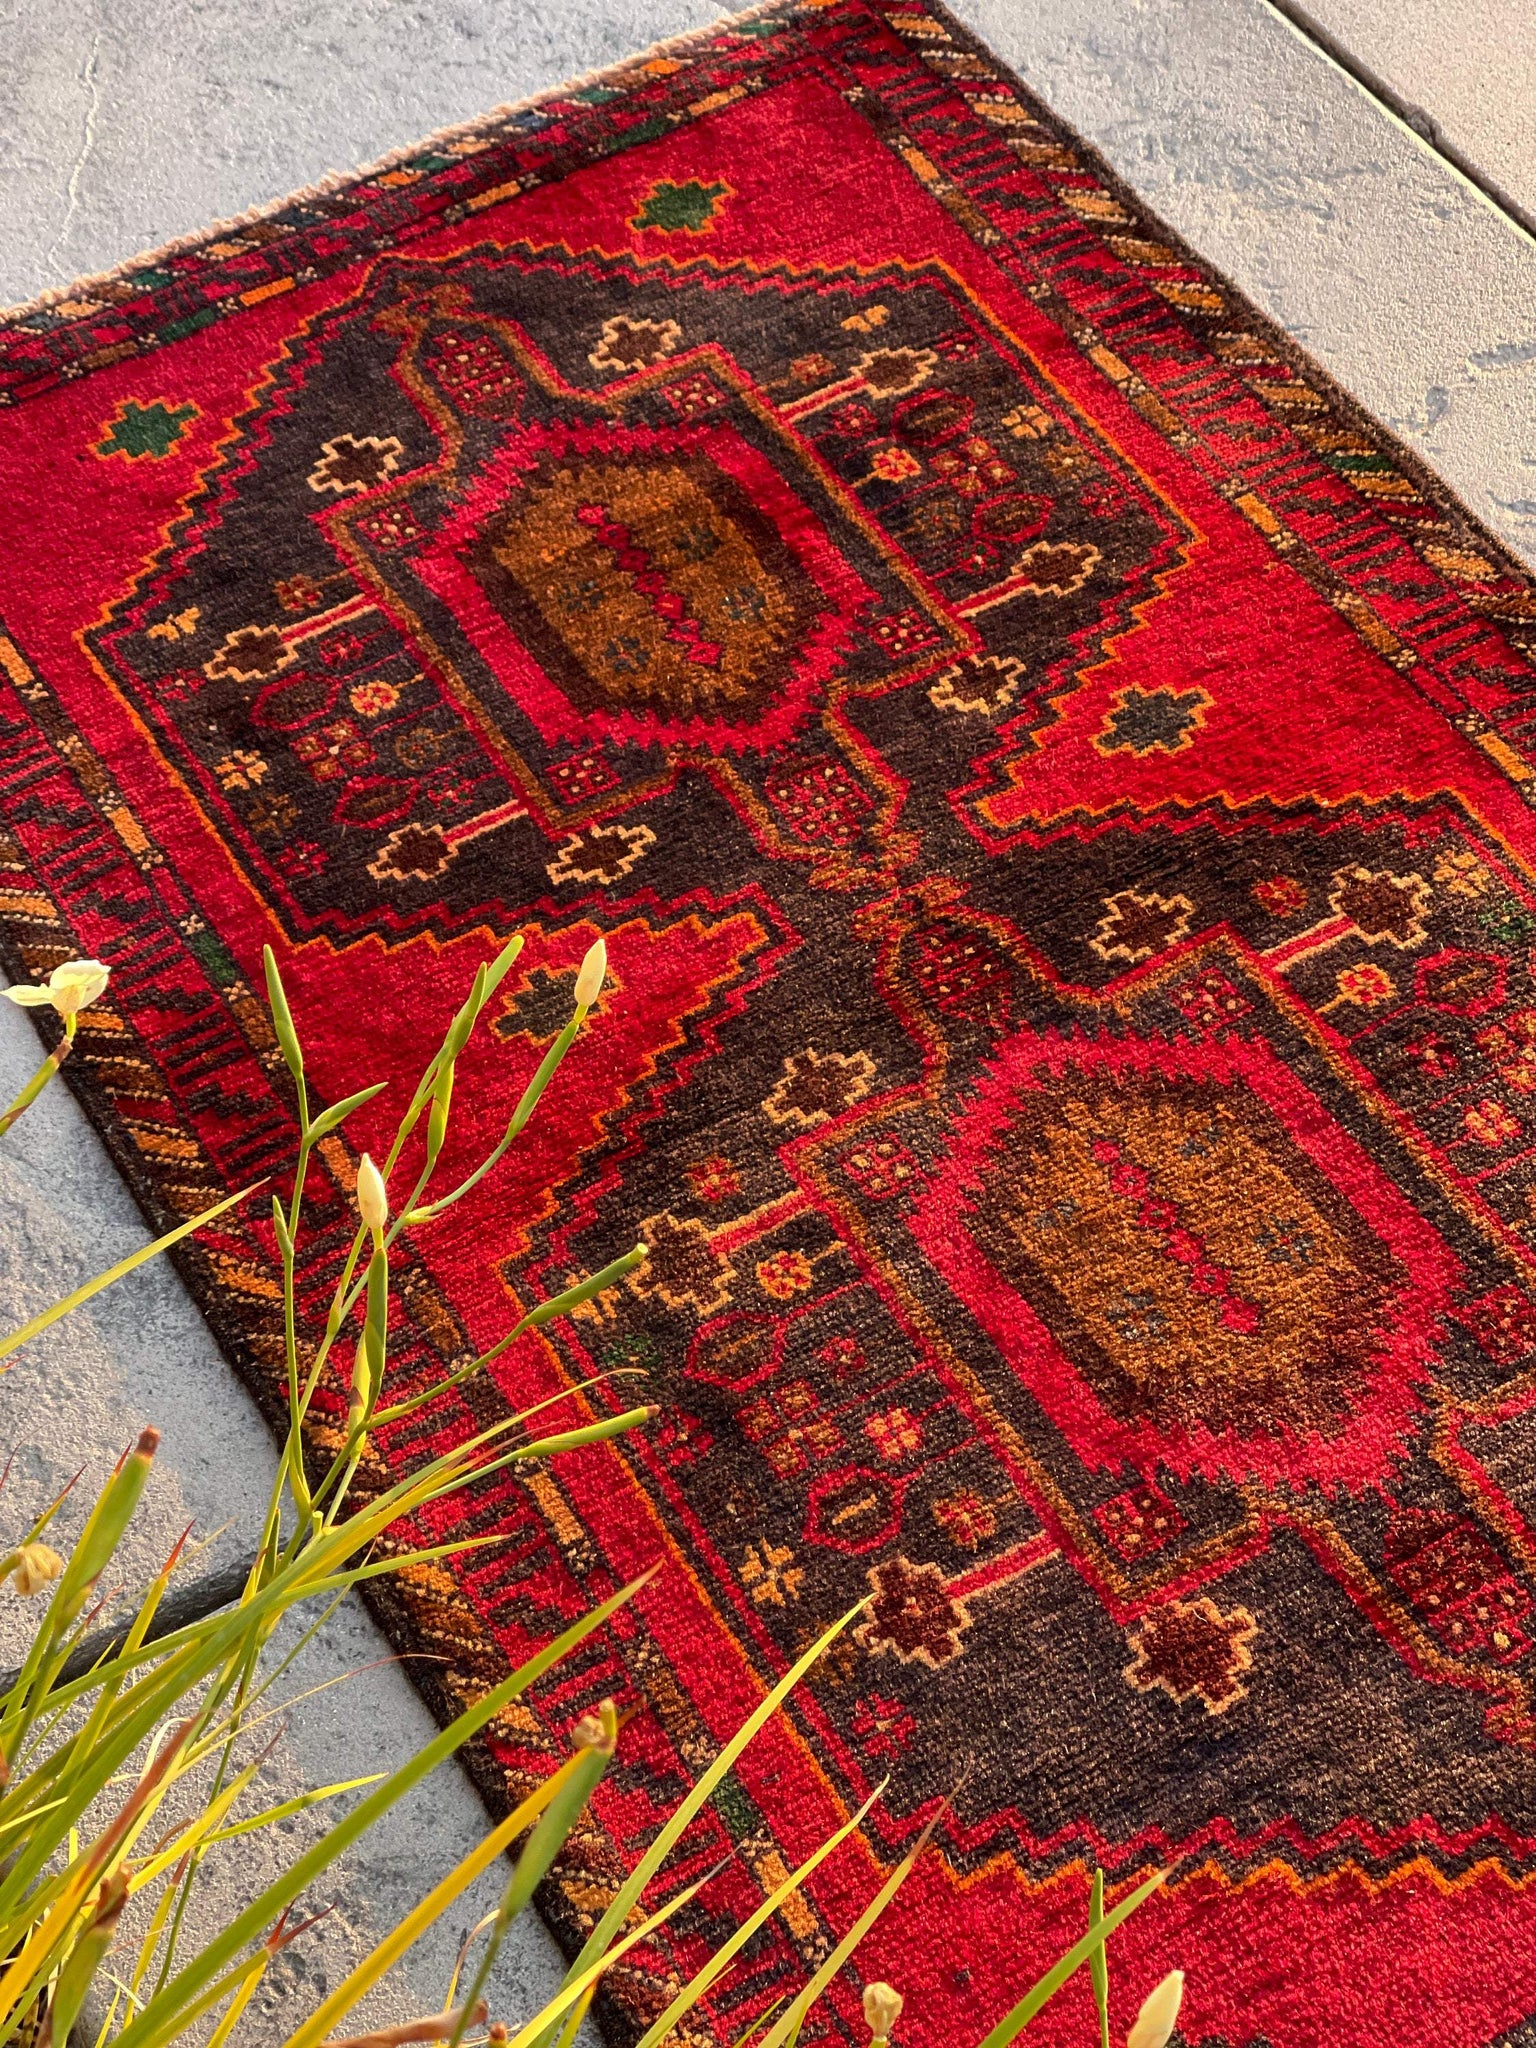 3x5 (90x150) Handmade Vintage Afghan Rug | Red Black Orange Grey Gray Green | Nomadic Baluch Boho Bohemian Tribal Turkish Moroccan Wool